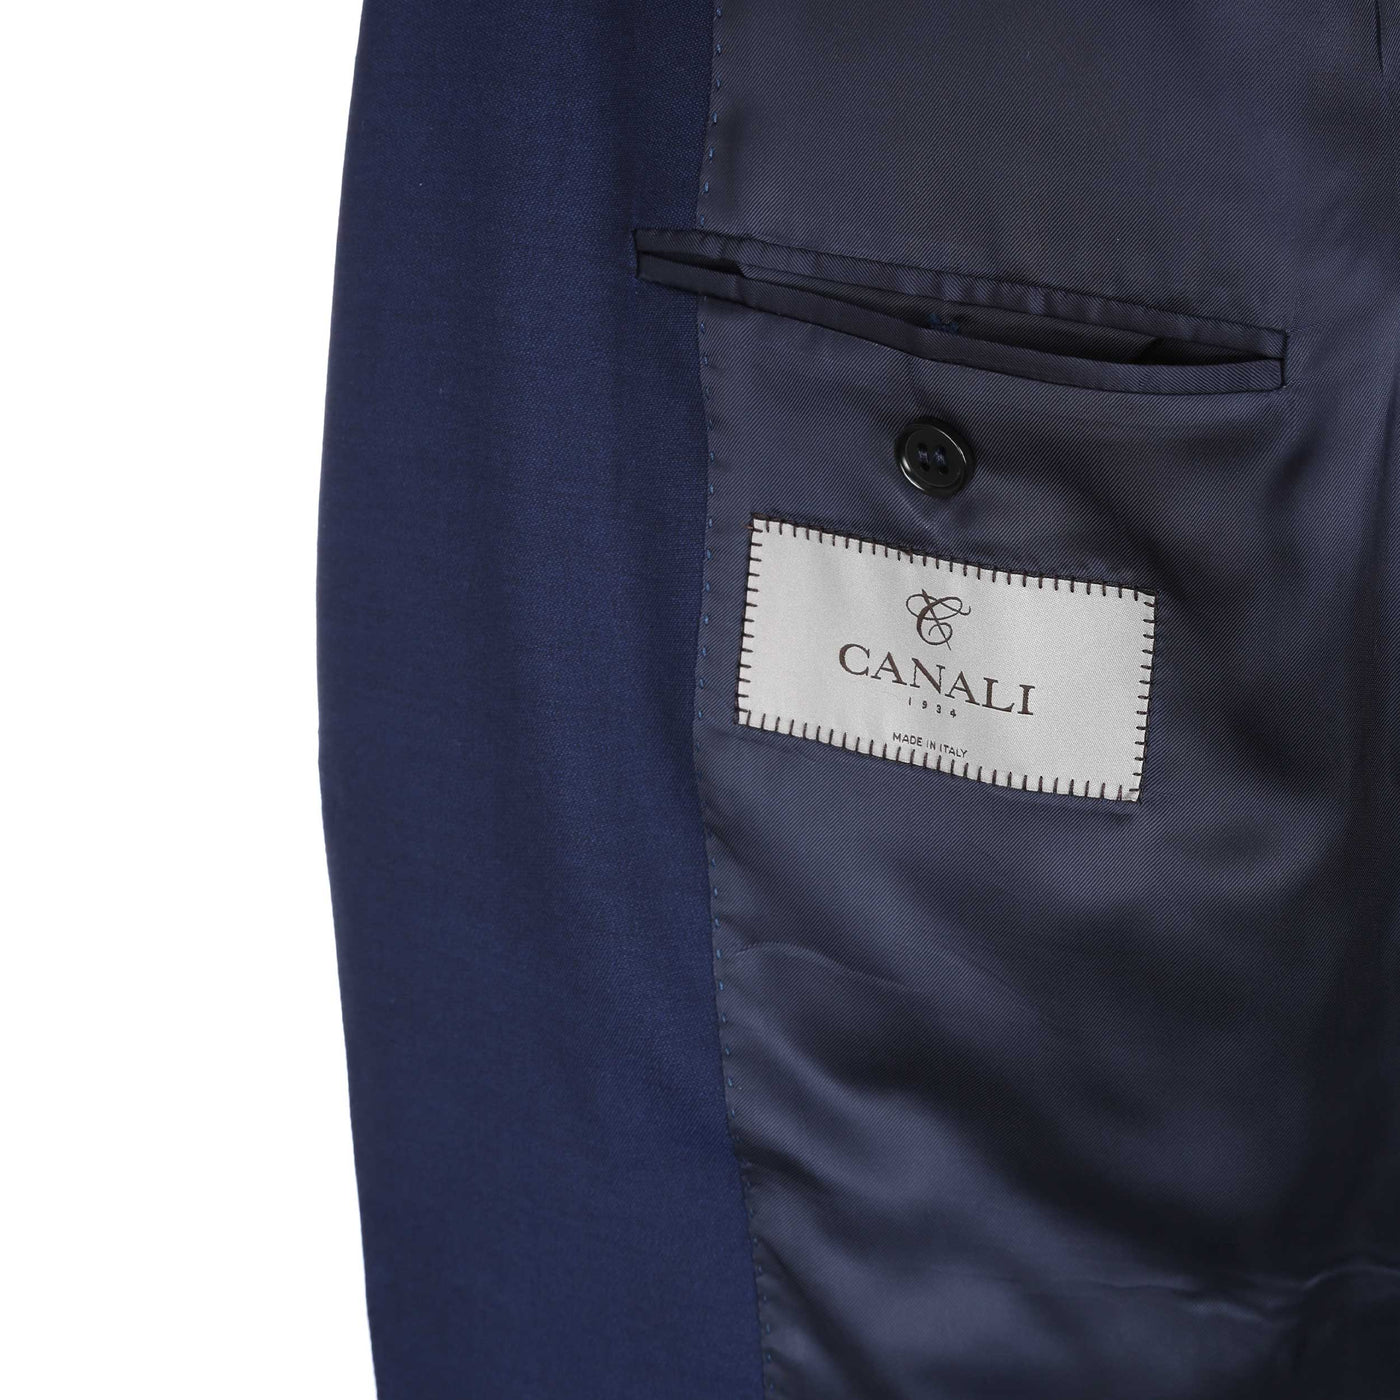 Canali Plain Notch Lapel Suit in Navy Inside